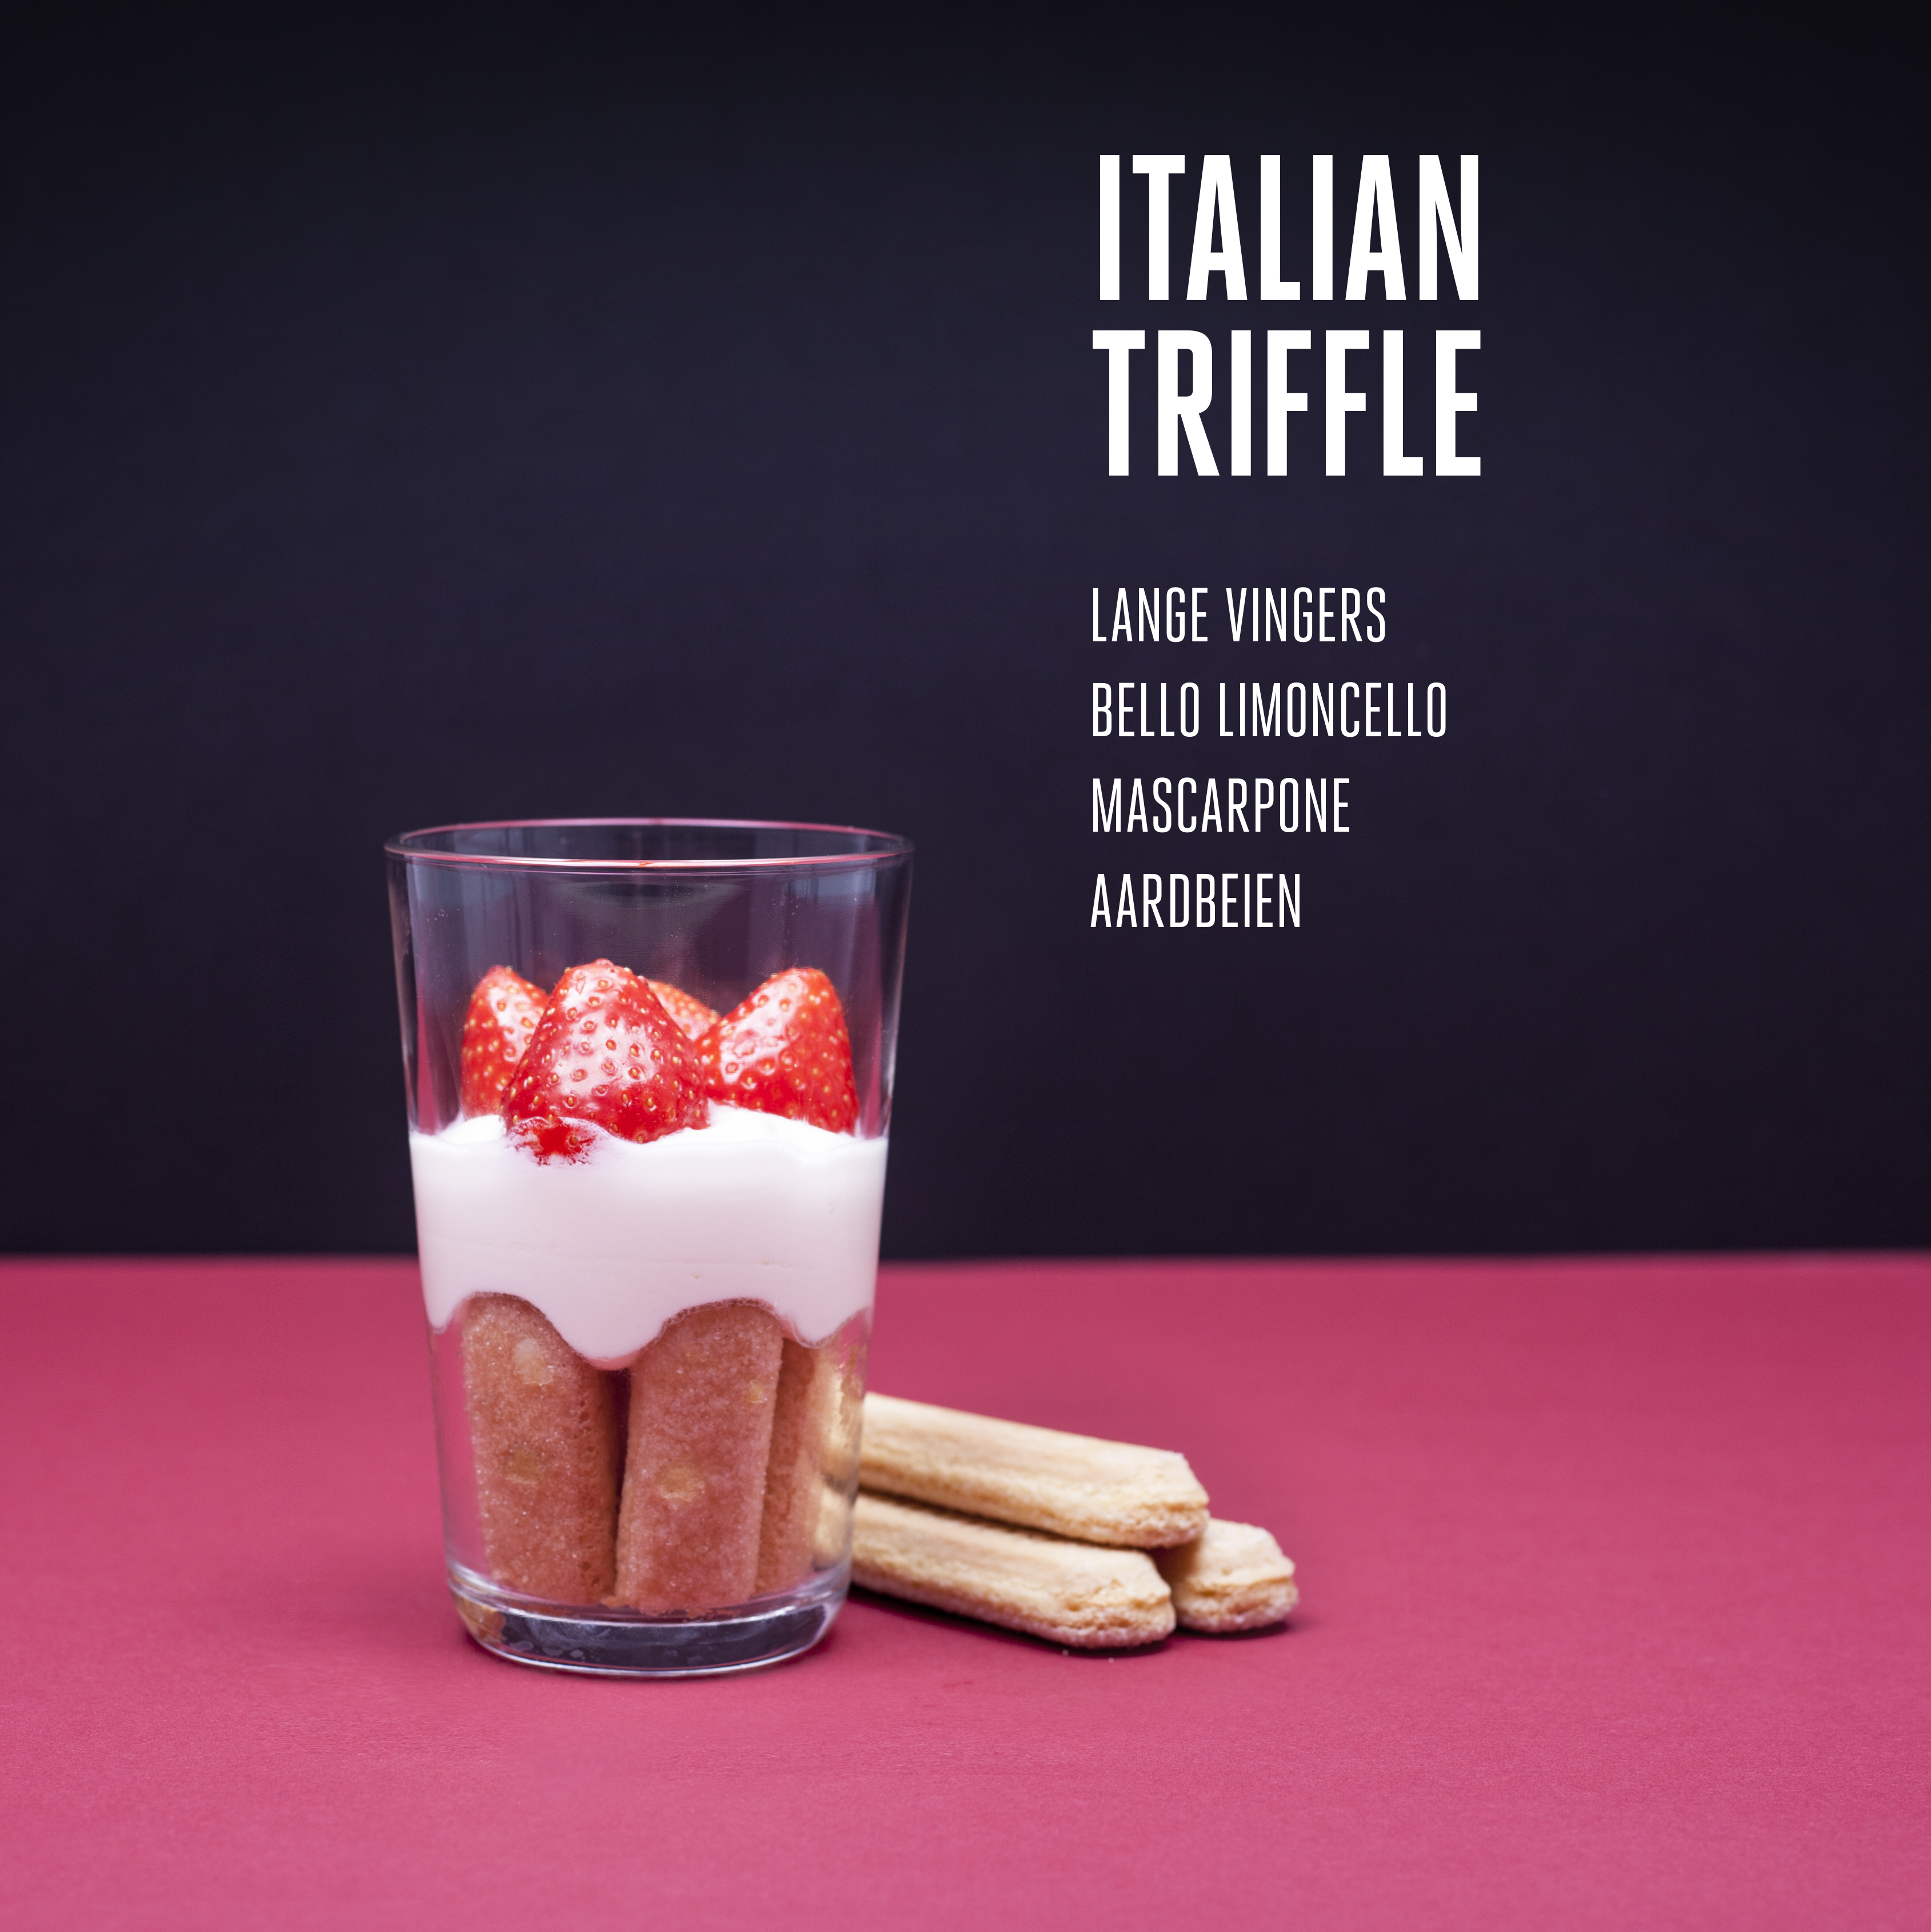 Italian trifle